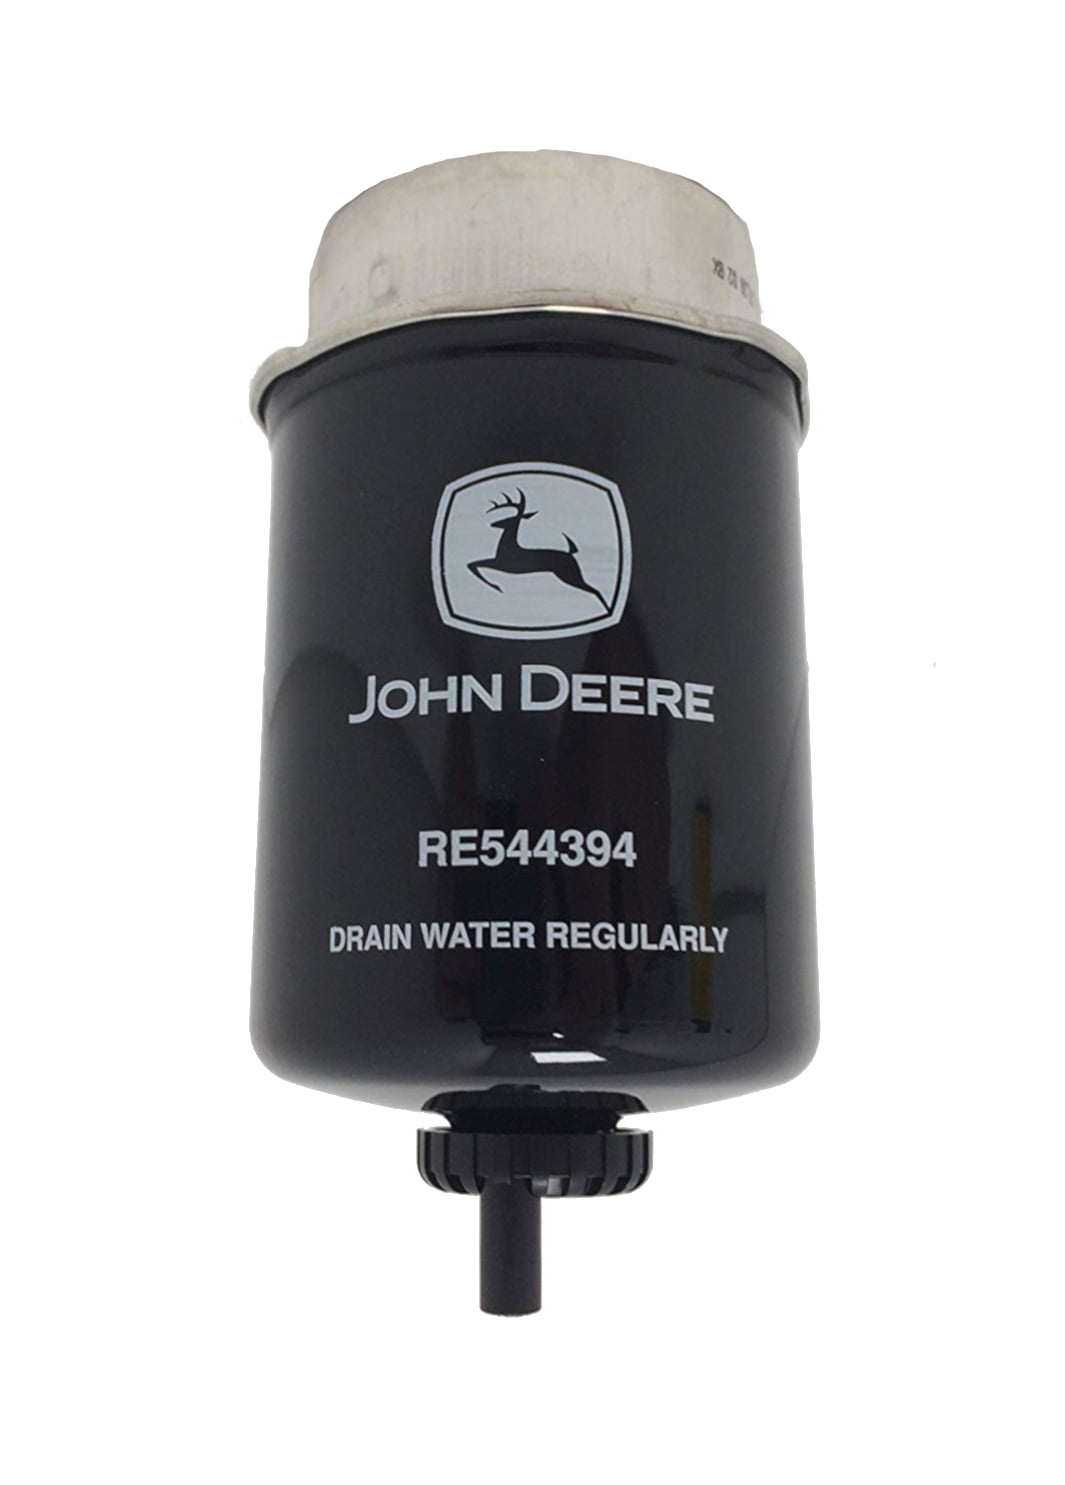 John Deere Original Equipment Filter Element - RE544394,1 - Walmart.com ...